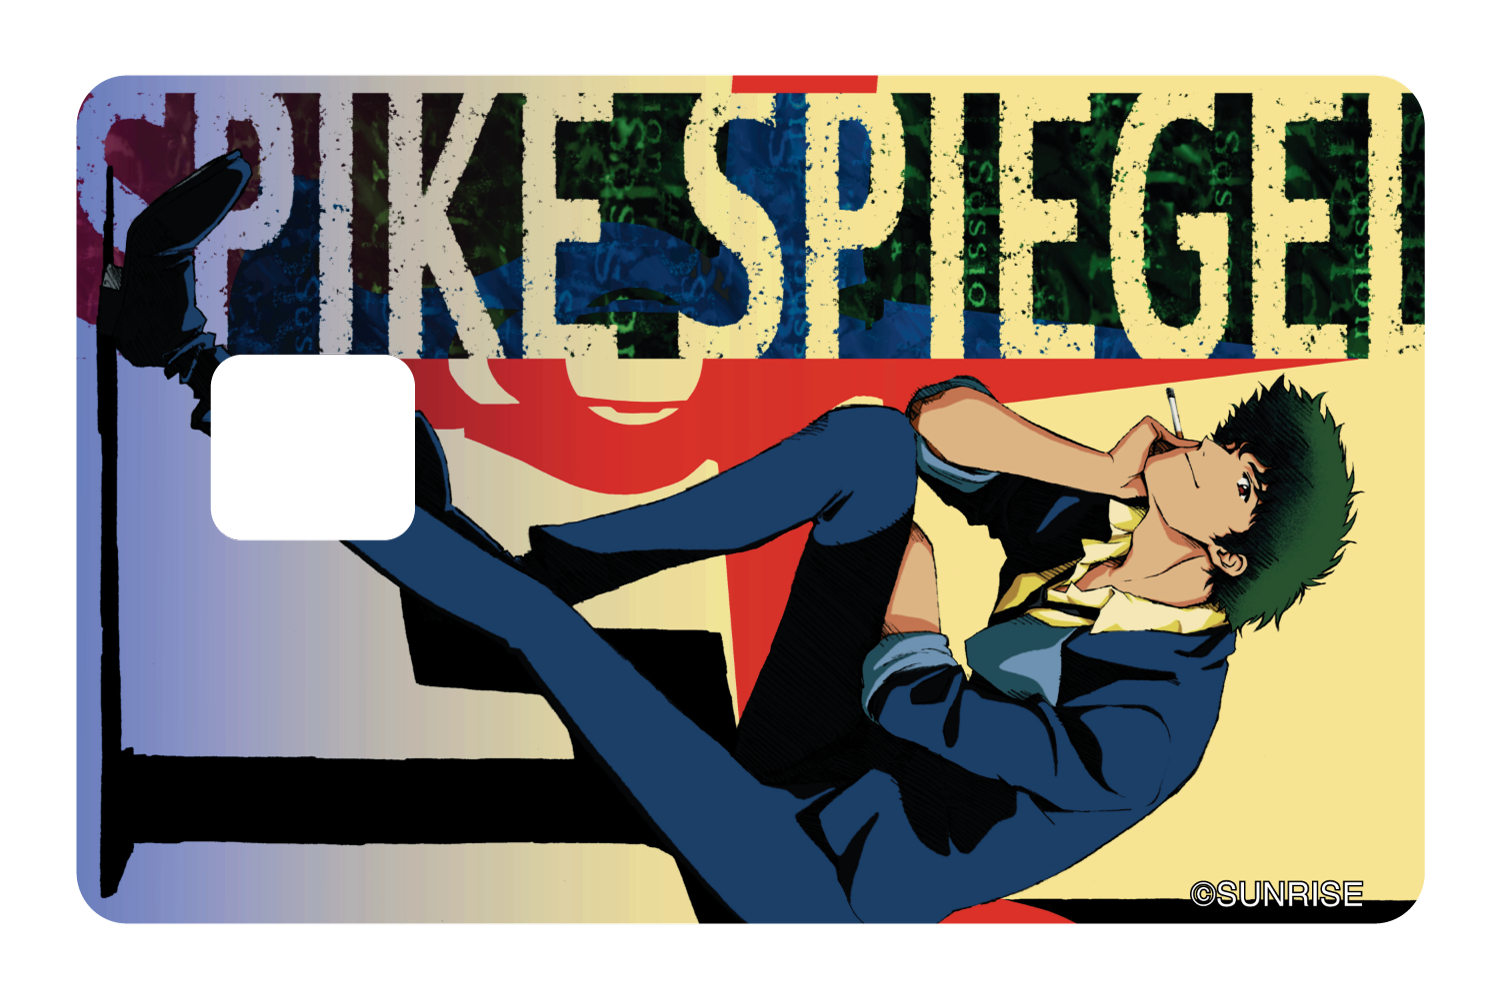 Spike Spiegel